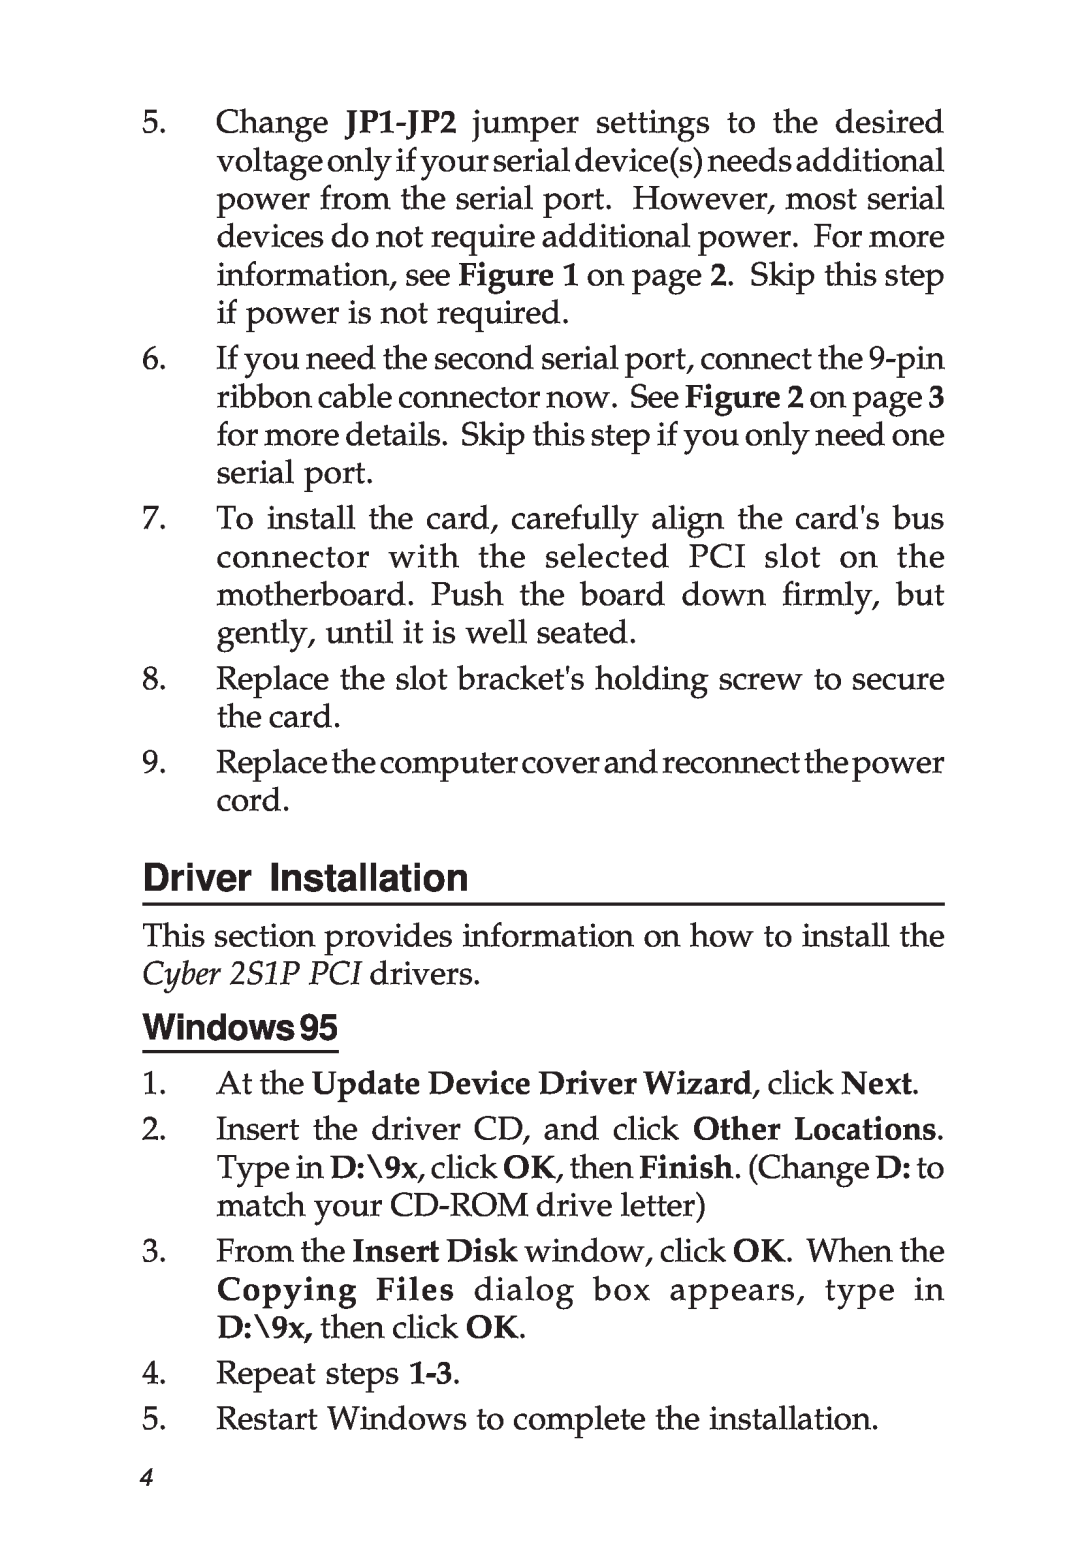 SIIG 2S1P manual Driver Installation, Windows 